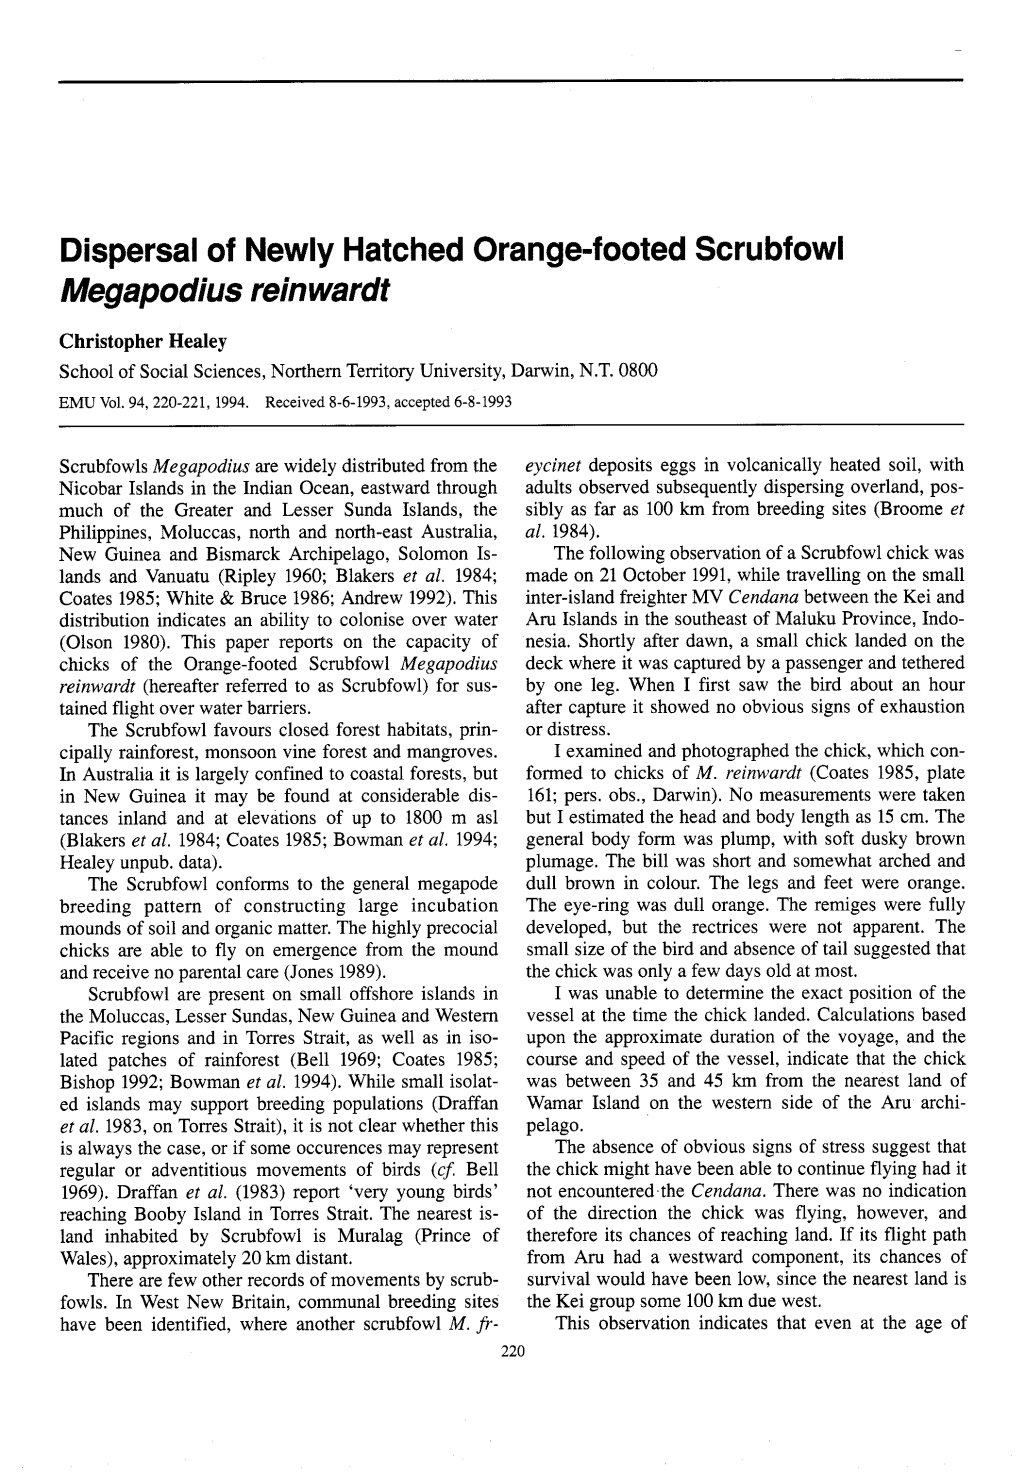 Dispersal of Newly Hatched Orange-Footed Scrubfowl Megapodius Rein Wardt